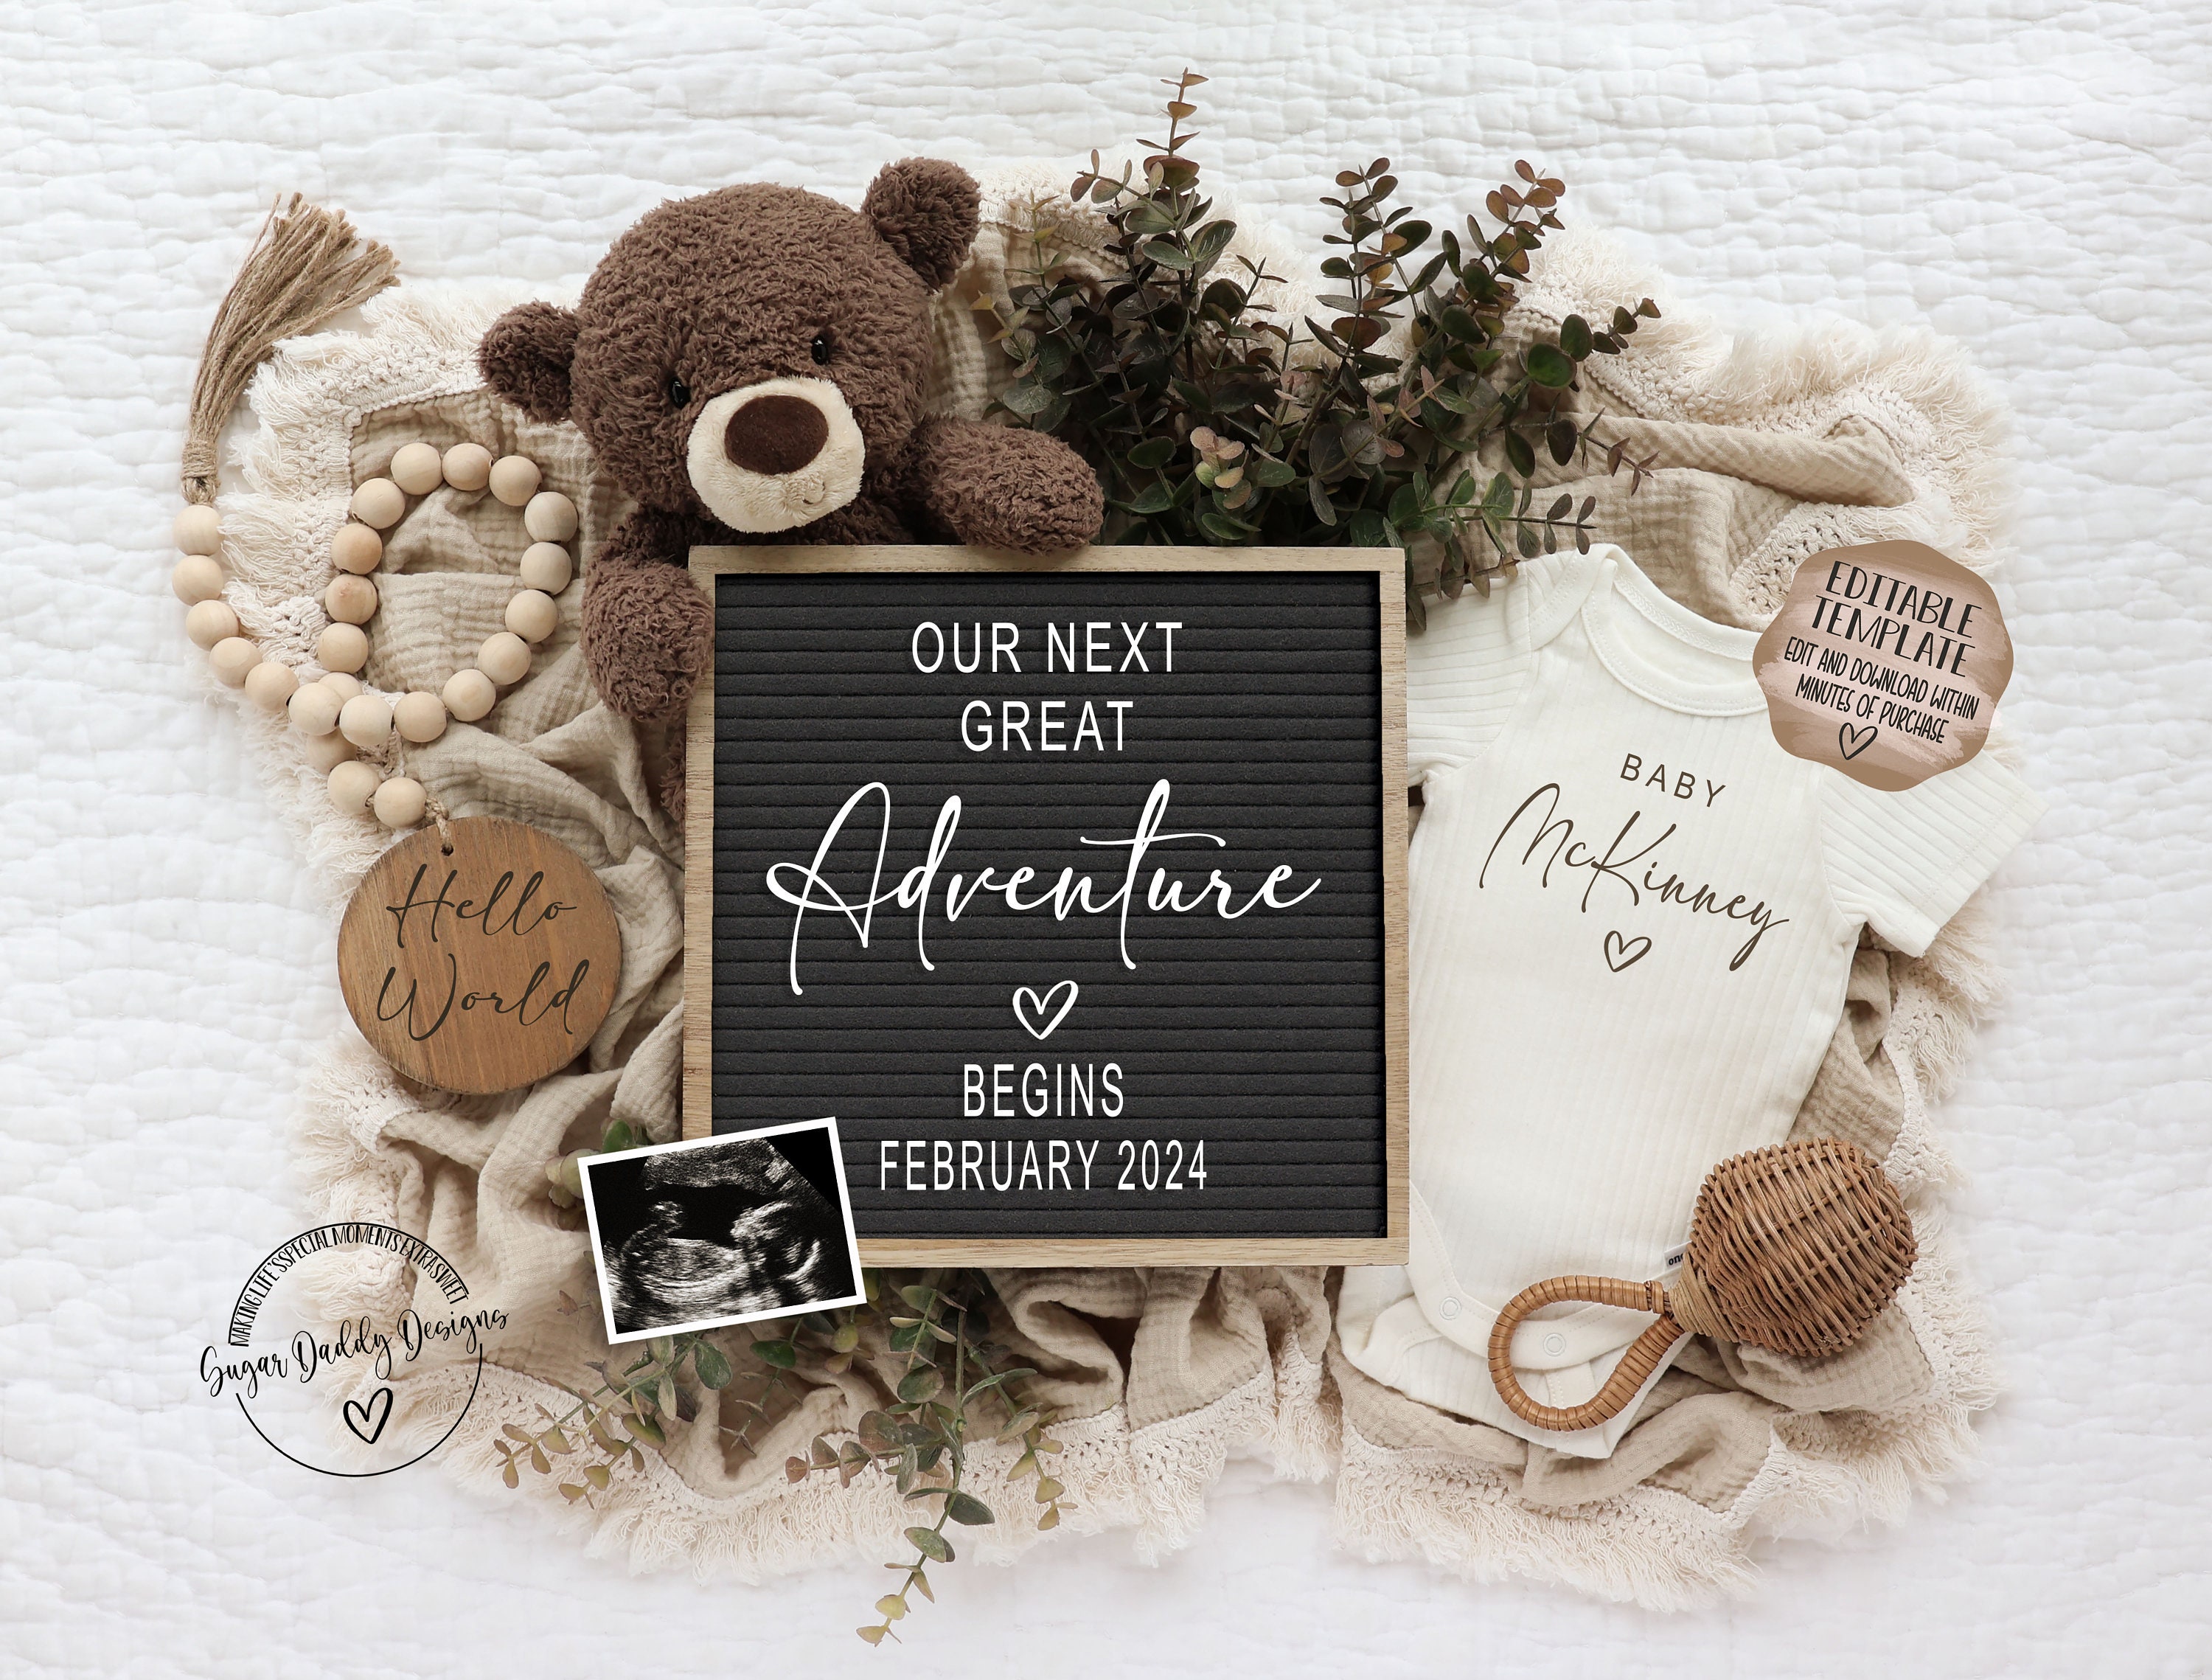 Ultrasound Gifts – My Baby's Heartbeat Bear